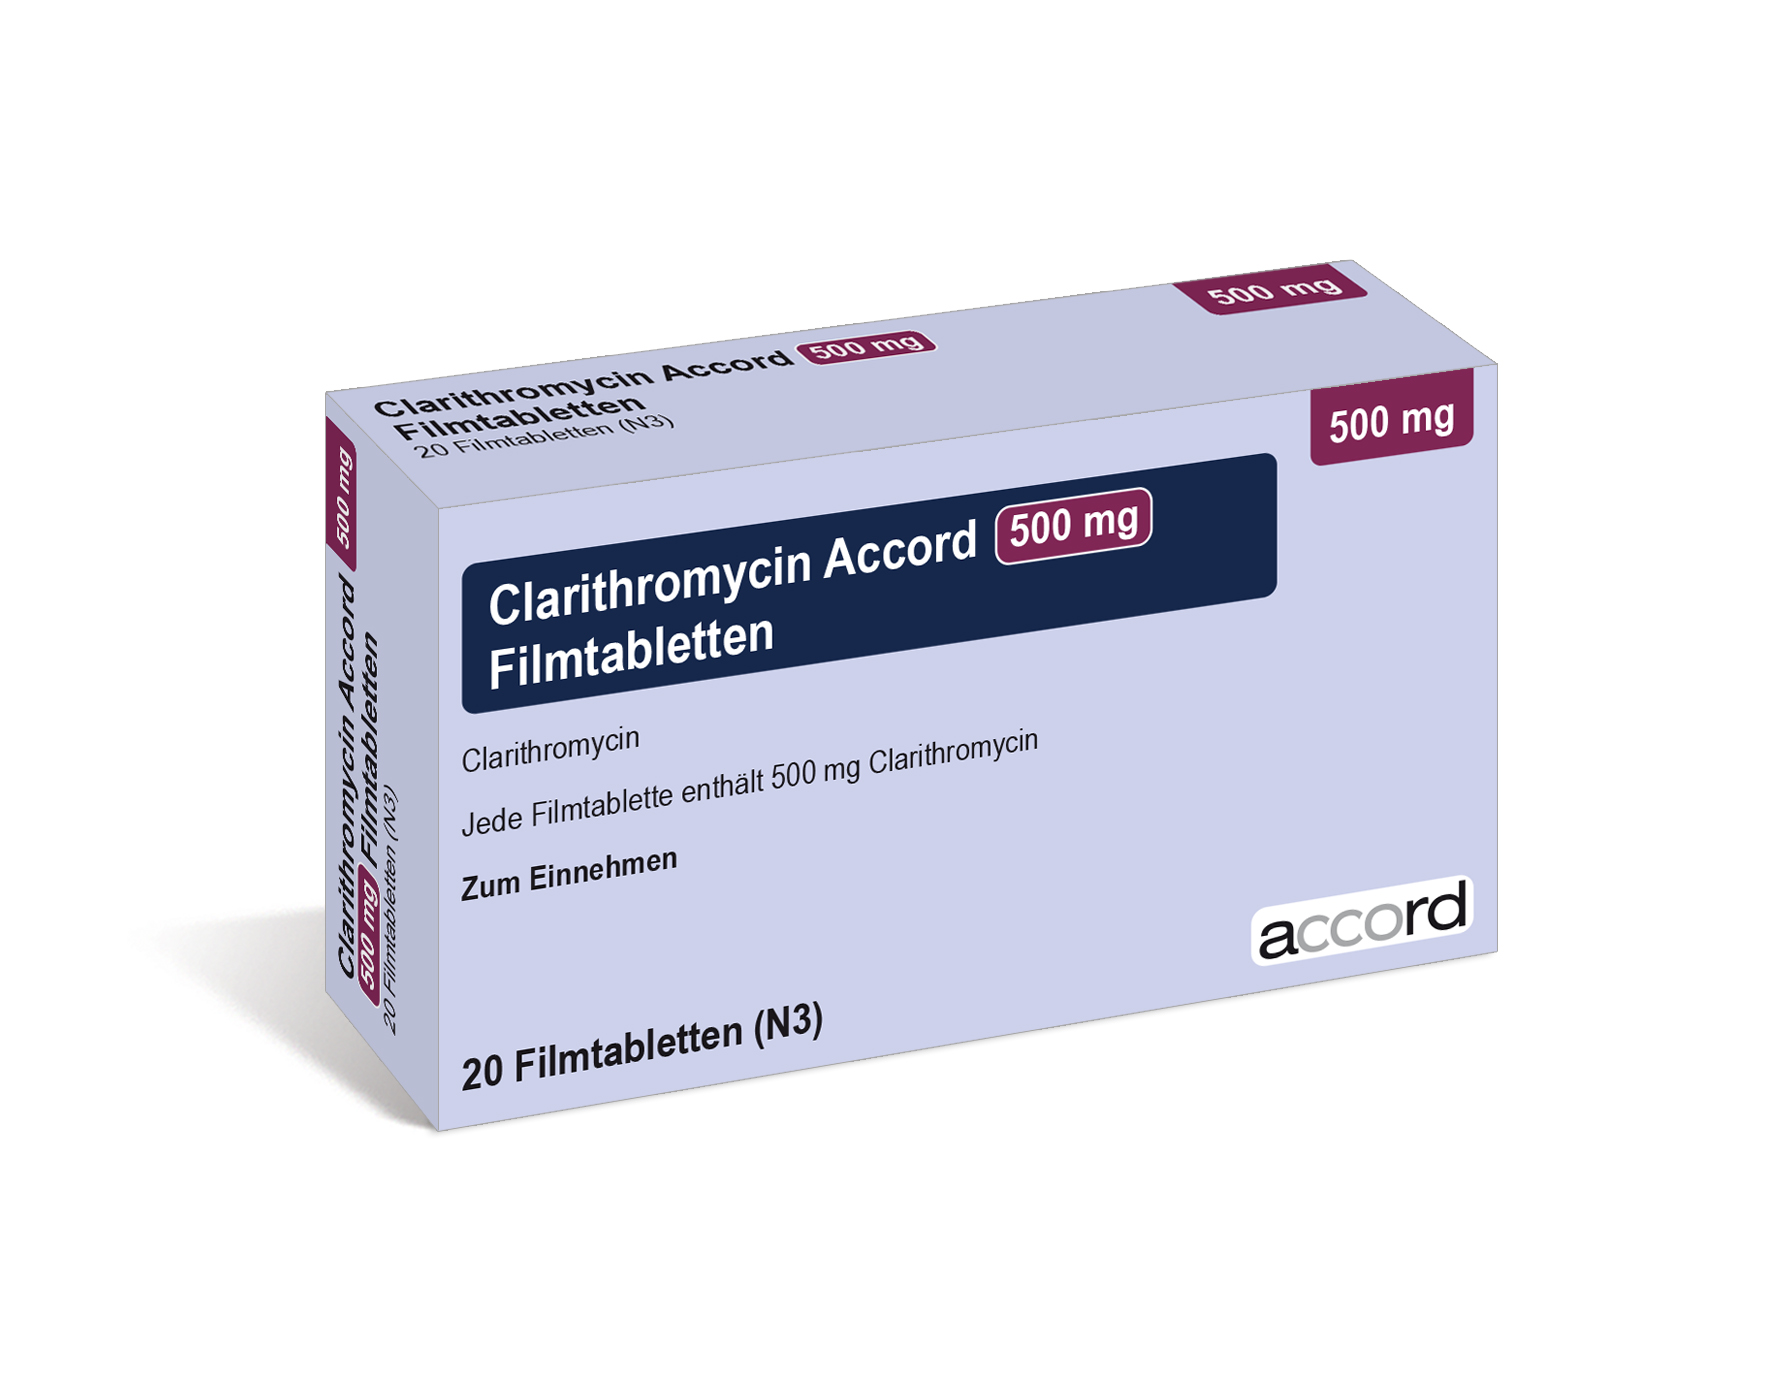 Accord Packshot Clarithromycin 500 mg